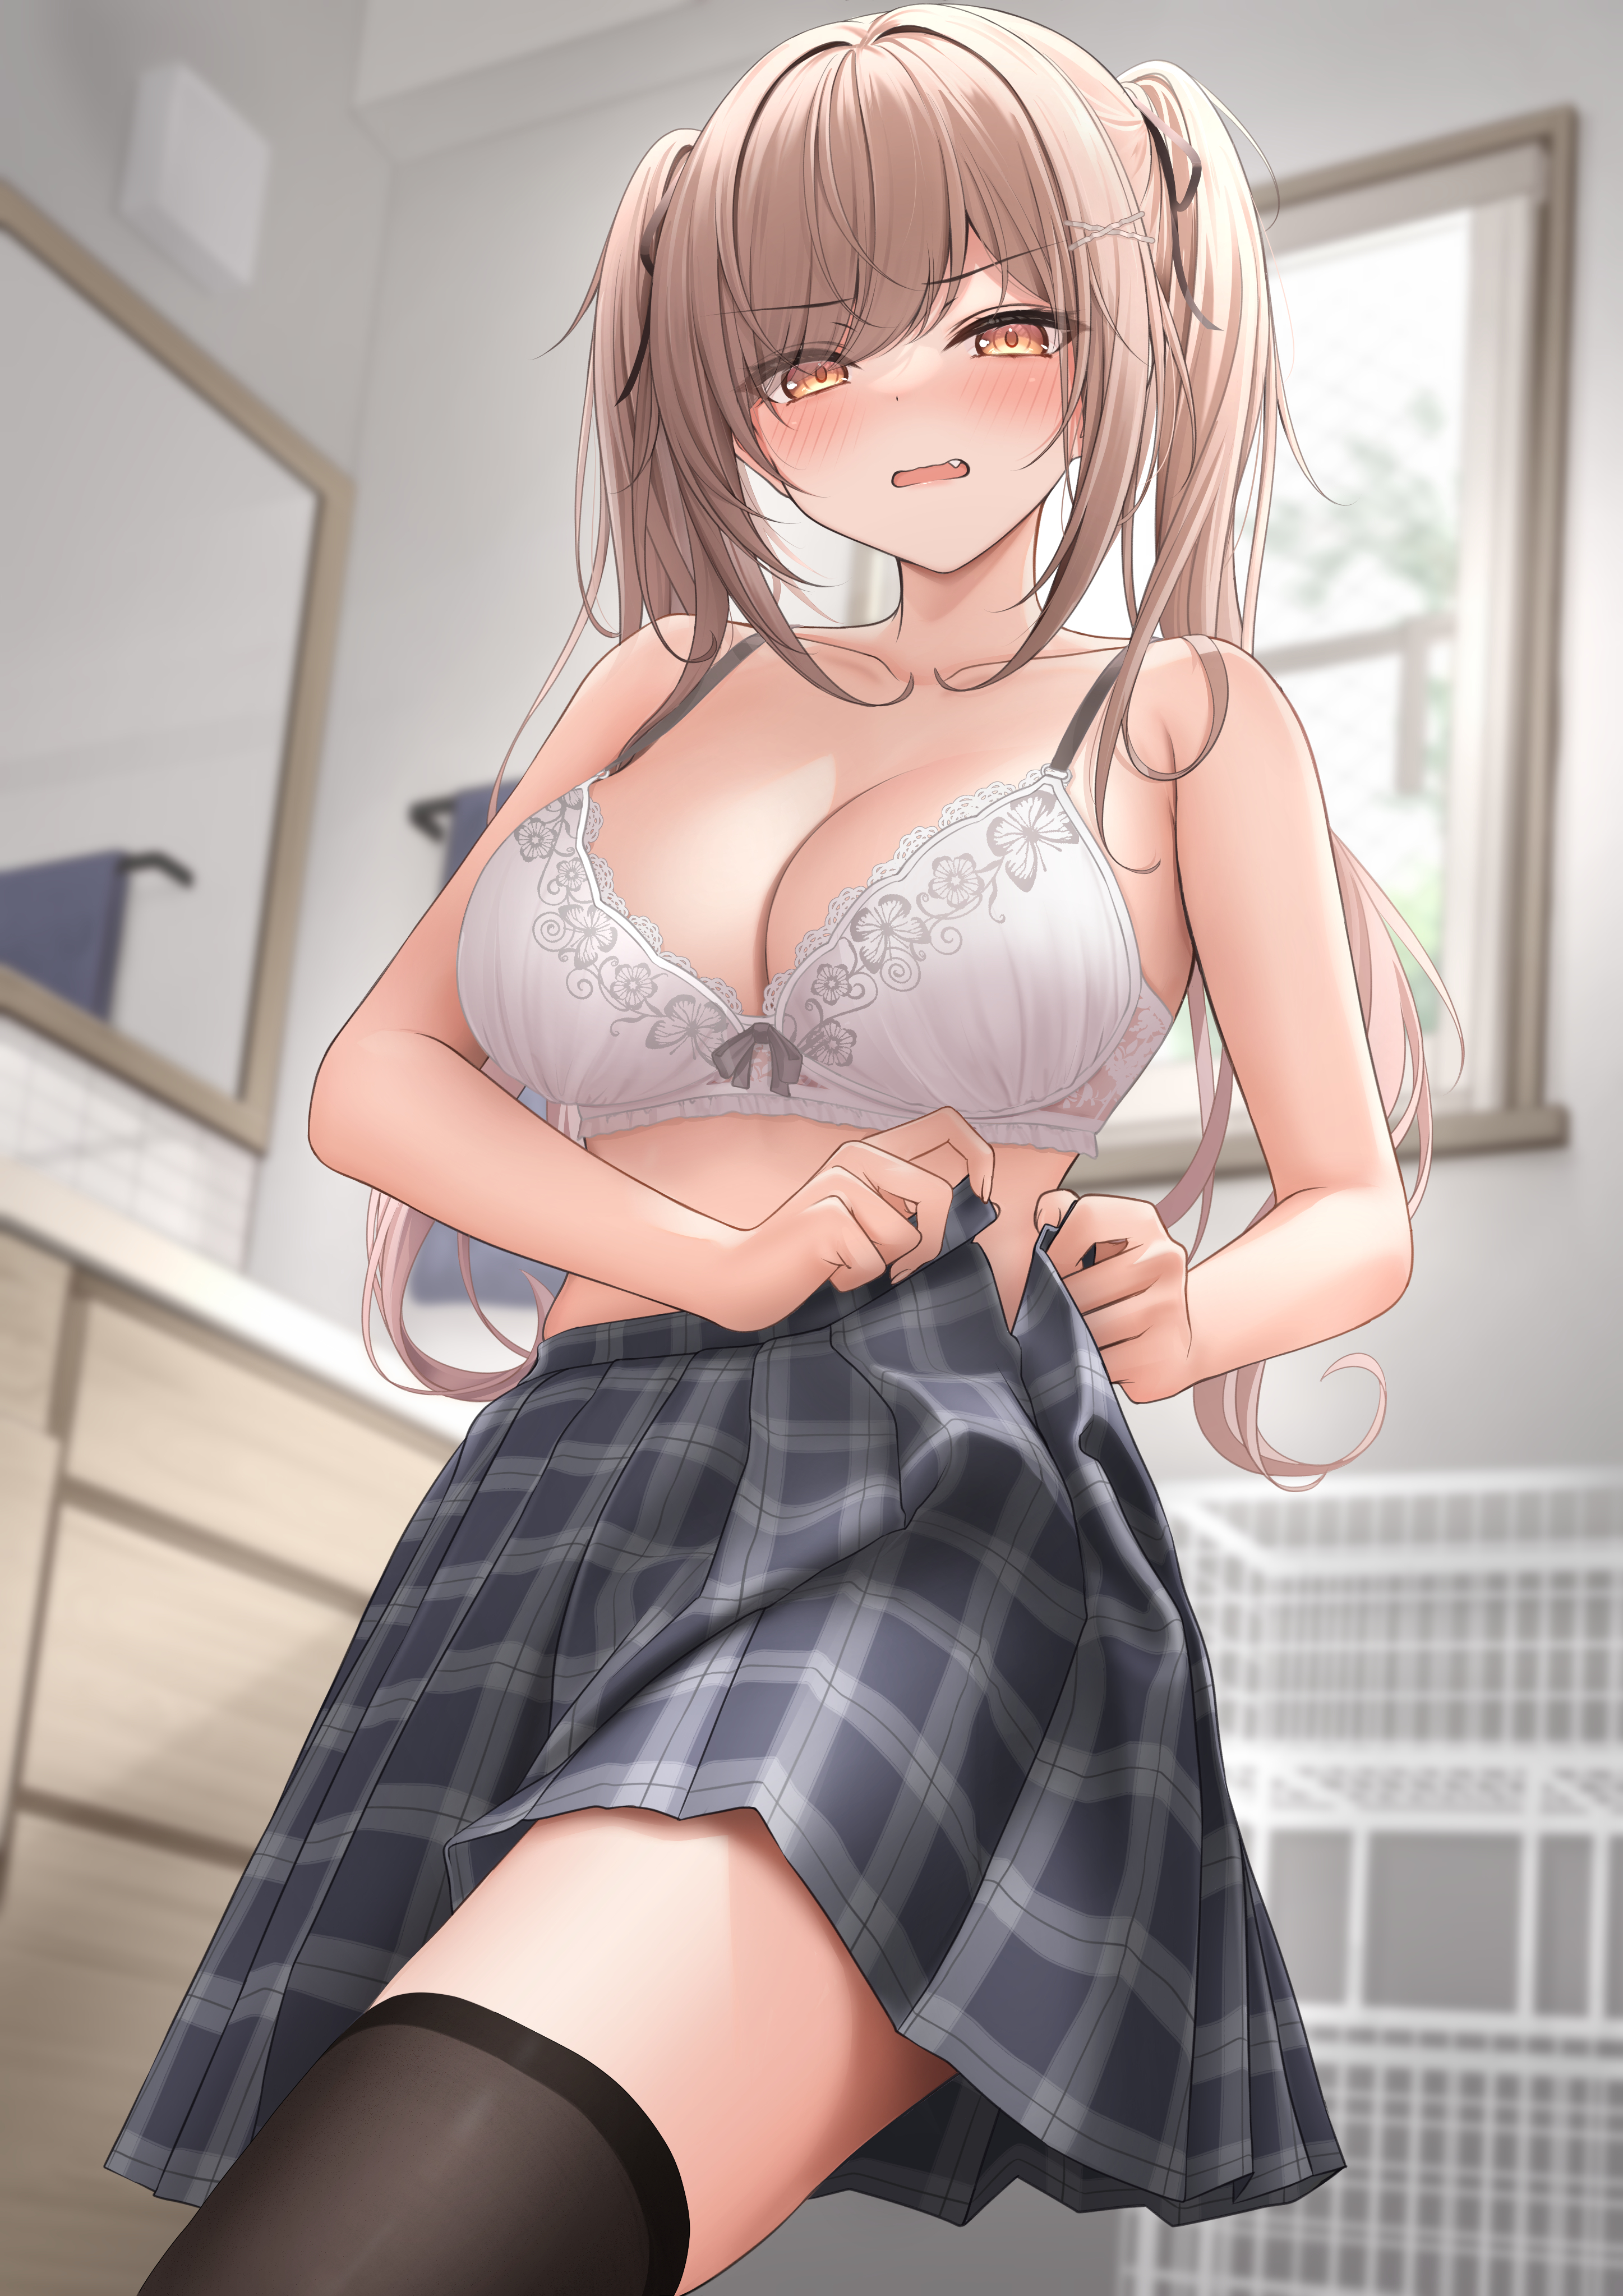 Anime 2894x4093 anime anime girls vertical bra cleavage twintails stockings big boobs blushing dressing artwork Karu